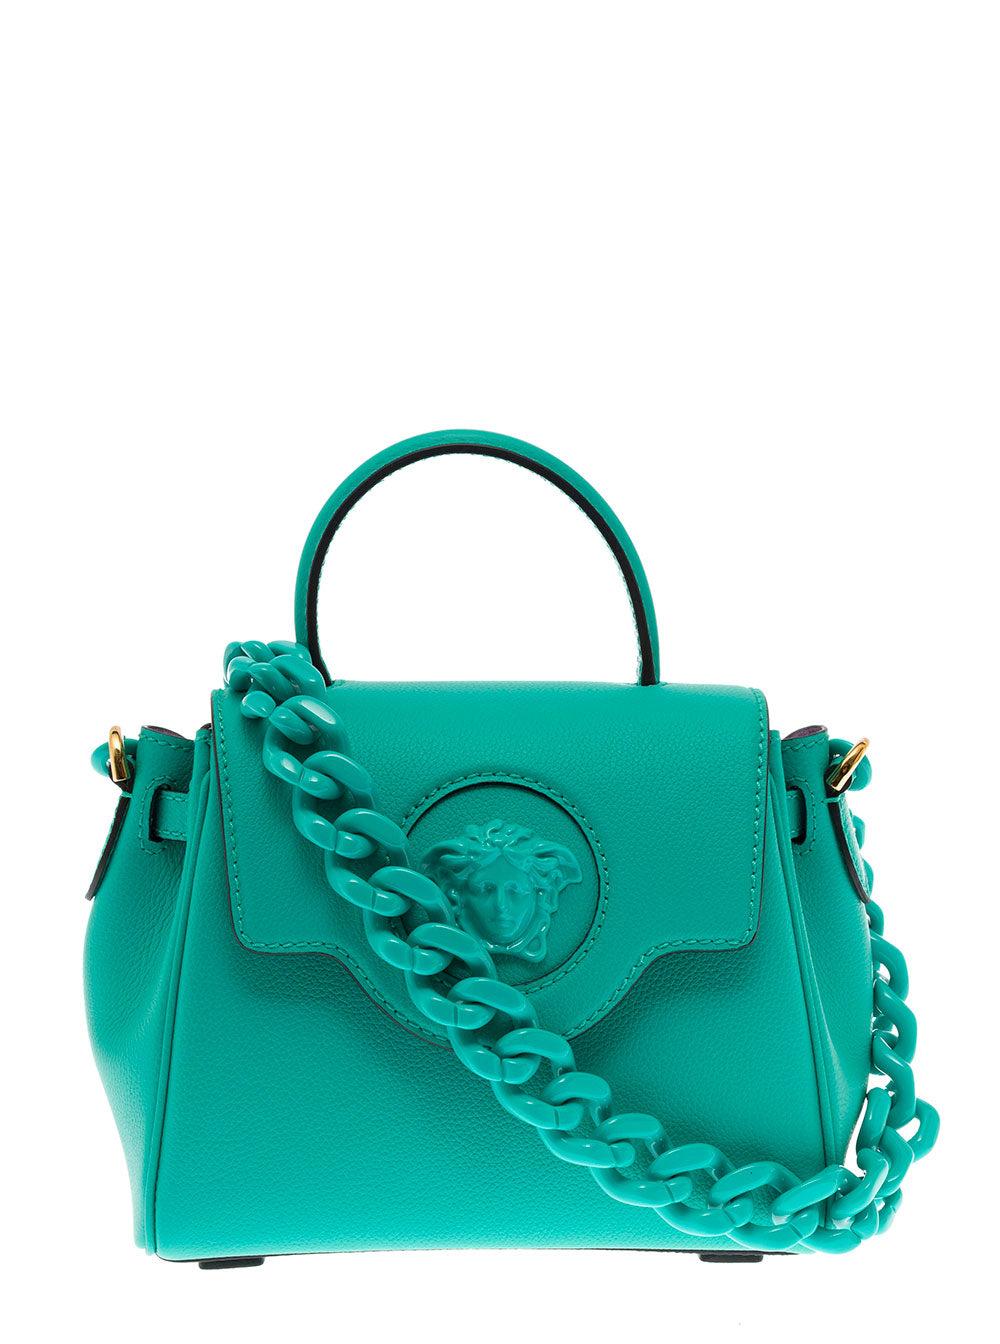 Versace Woman's La Medusa Turquoise Leather Handbag